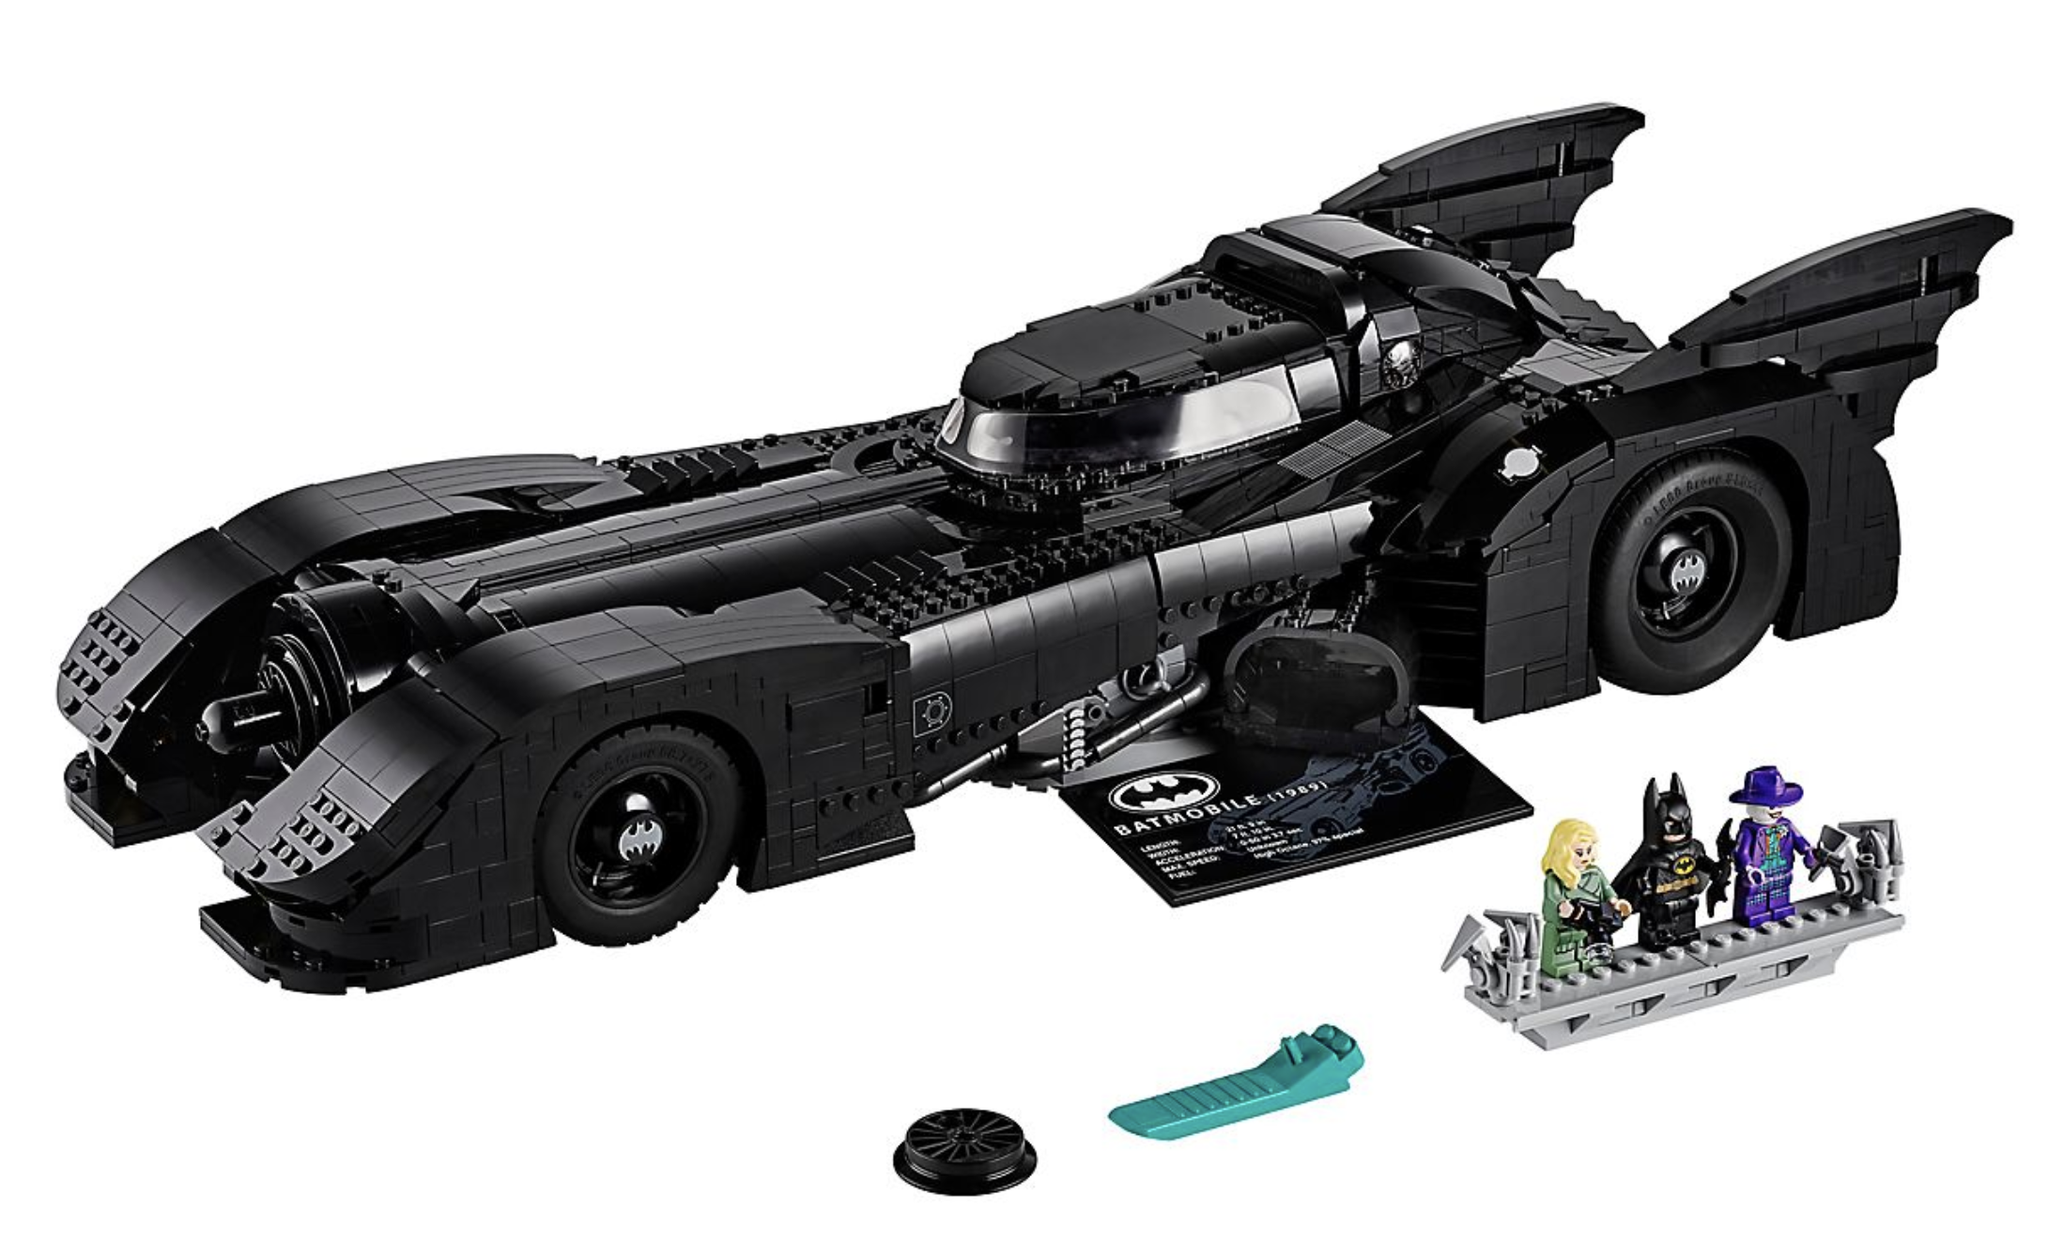 LEGO releases Batman's 1989 Batmobile replica